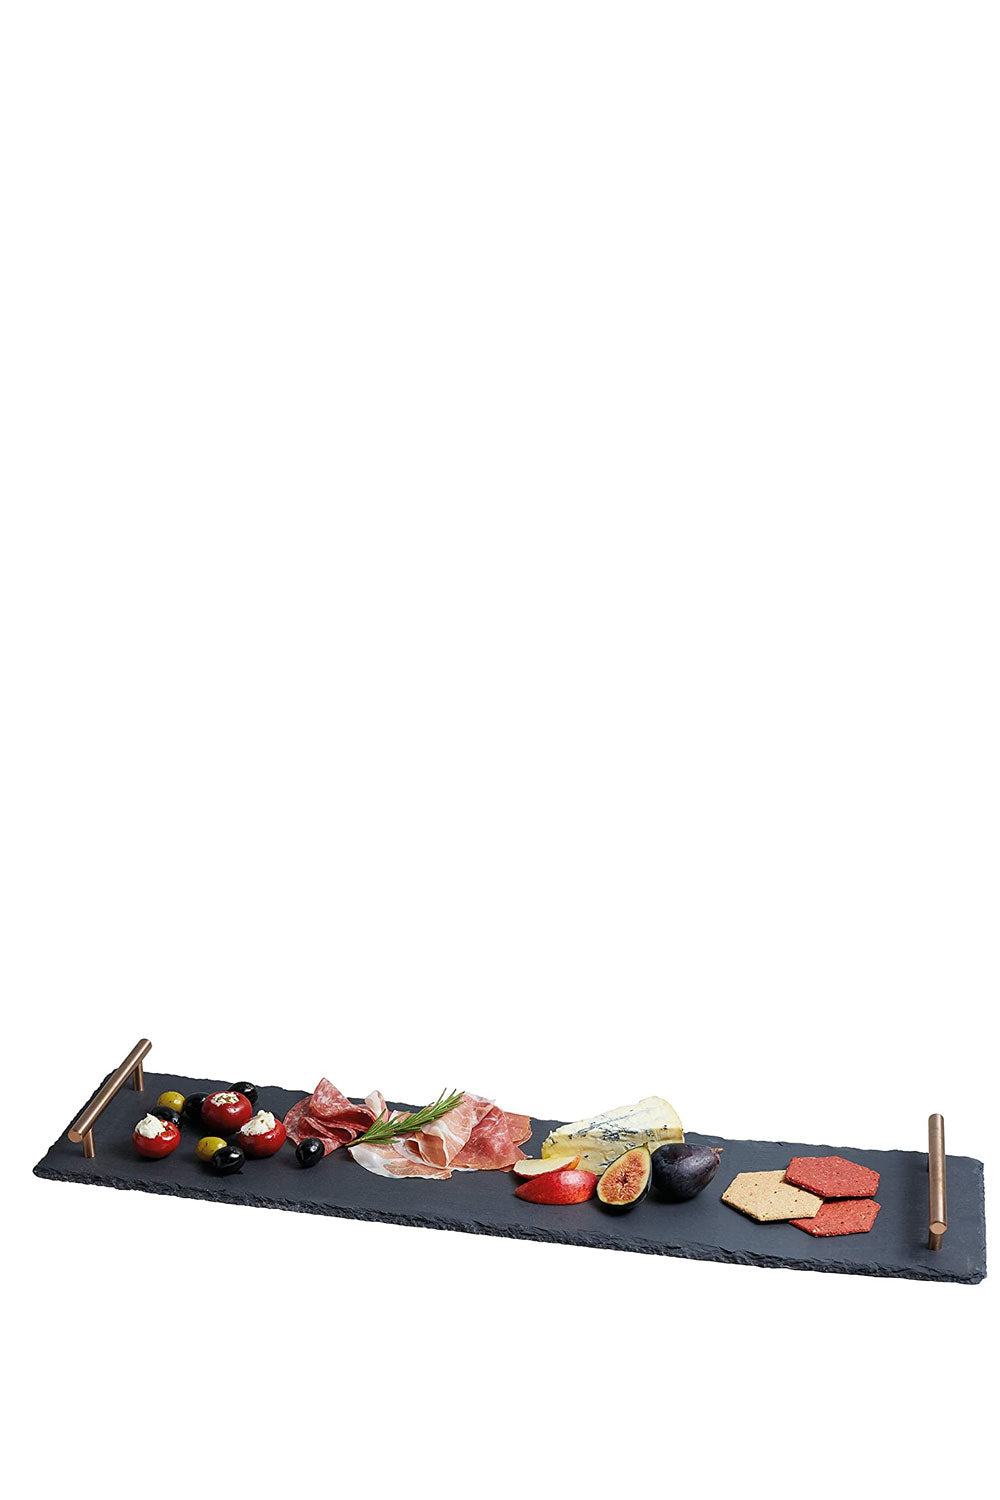 Serving Platter, 60 x 15 cm, Slate/Copper - Maison7